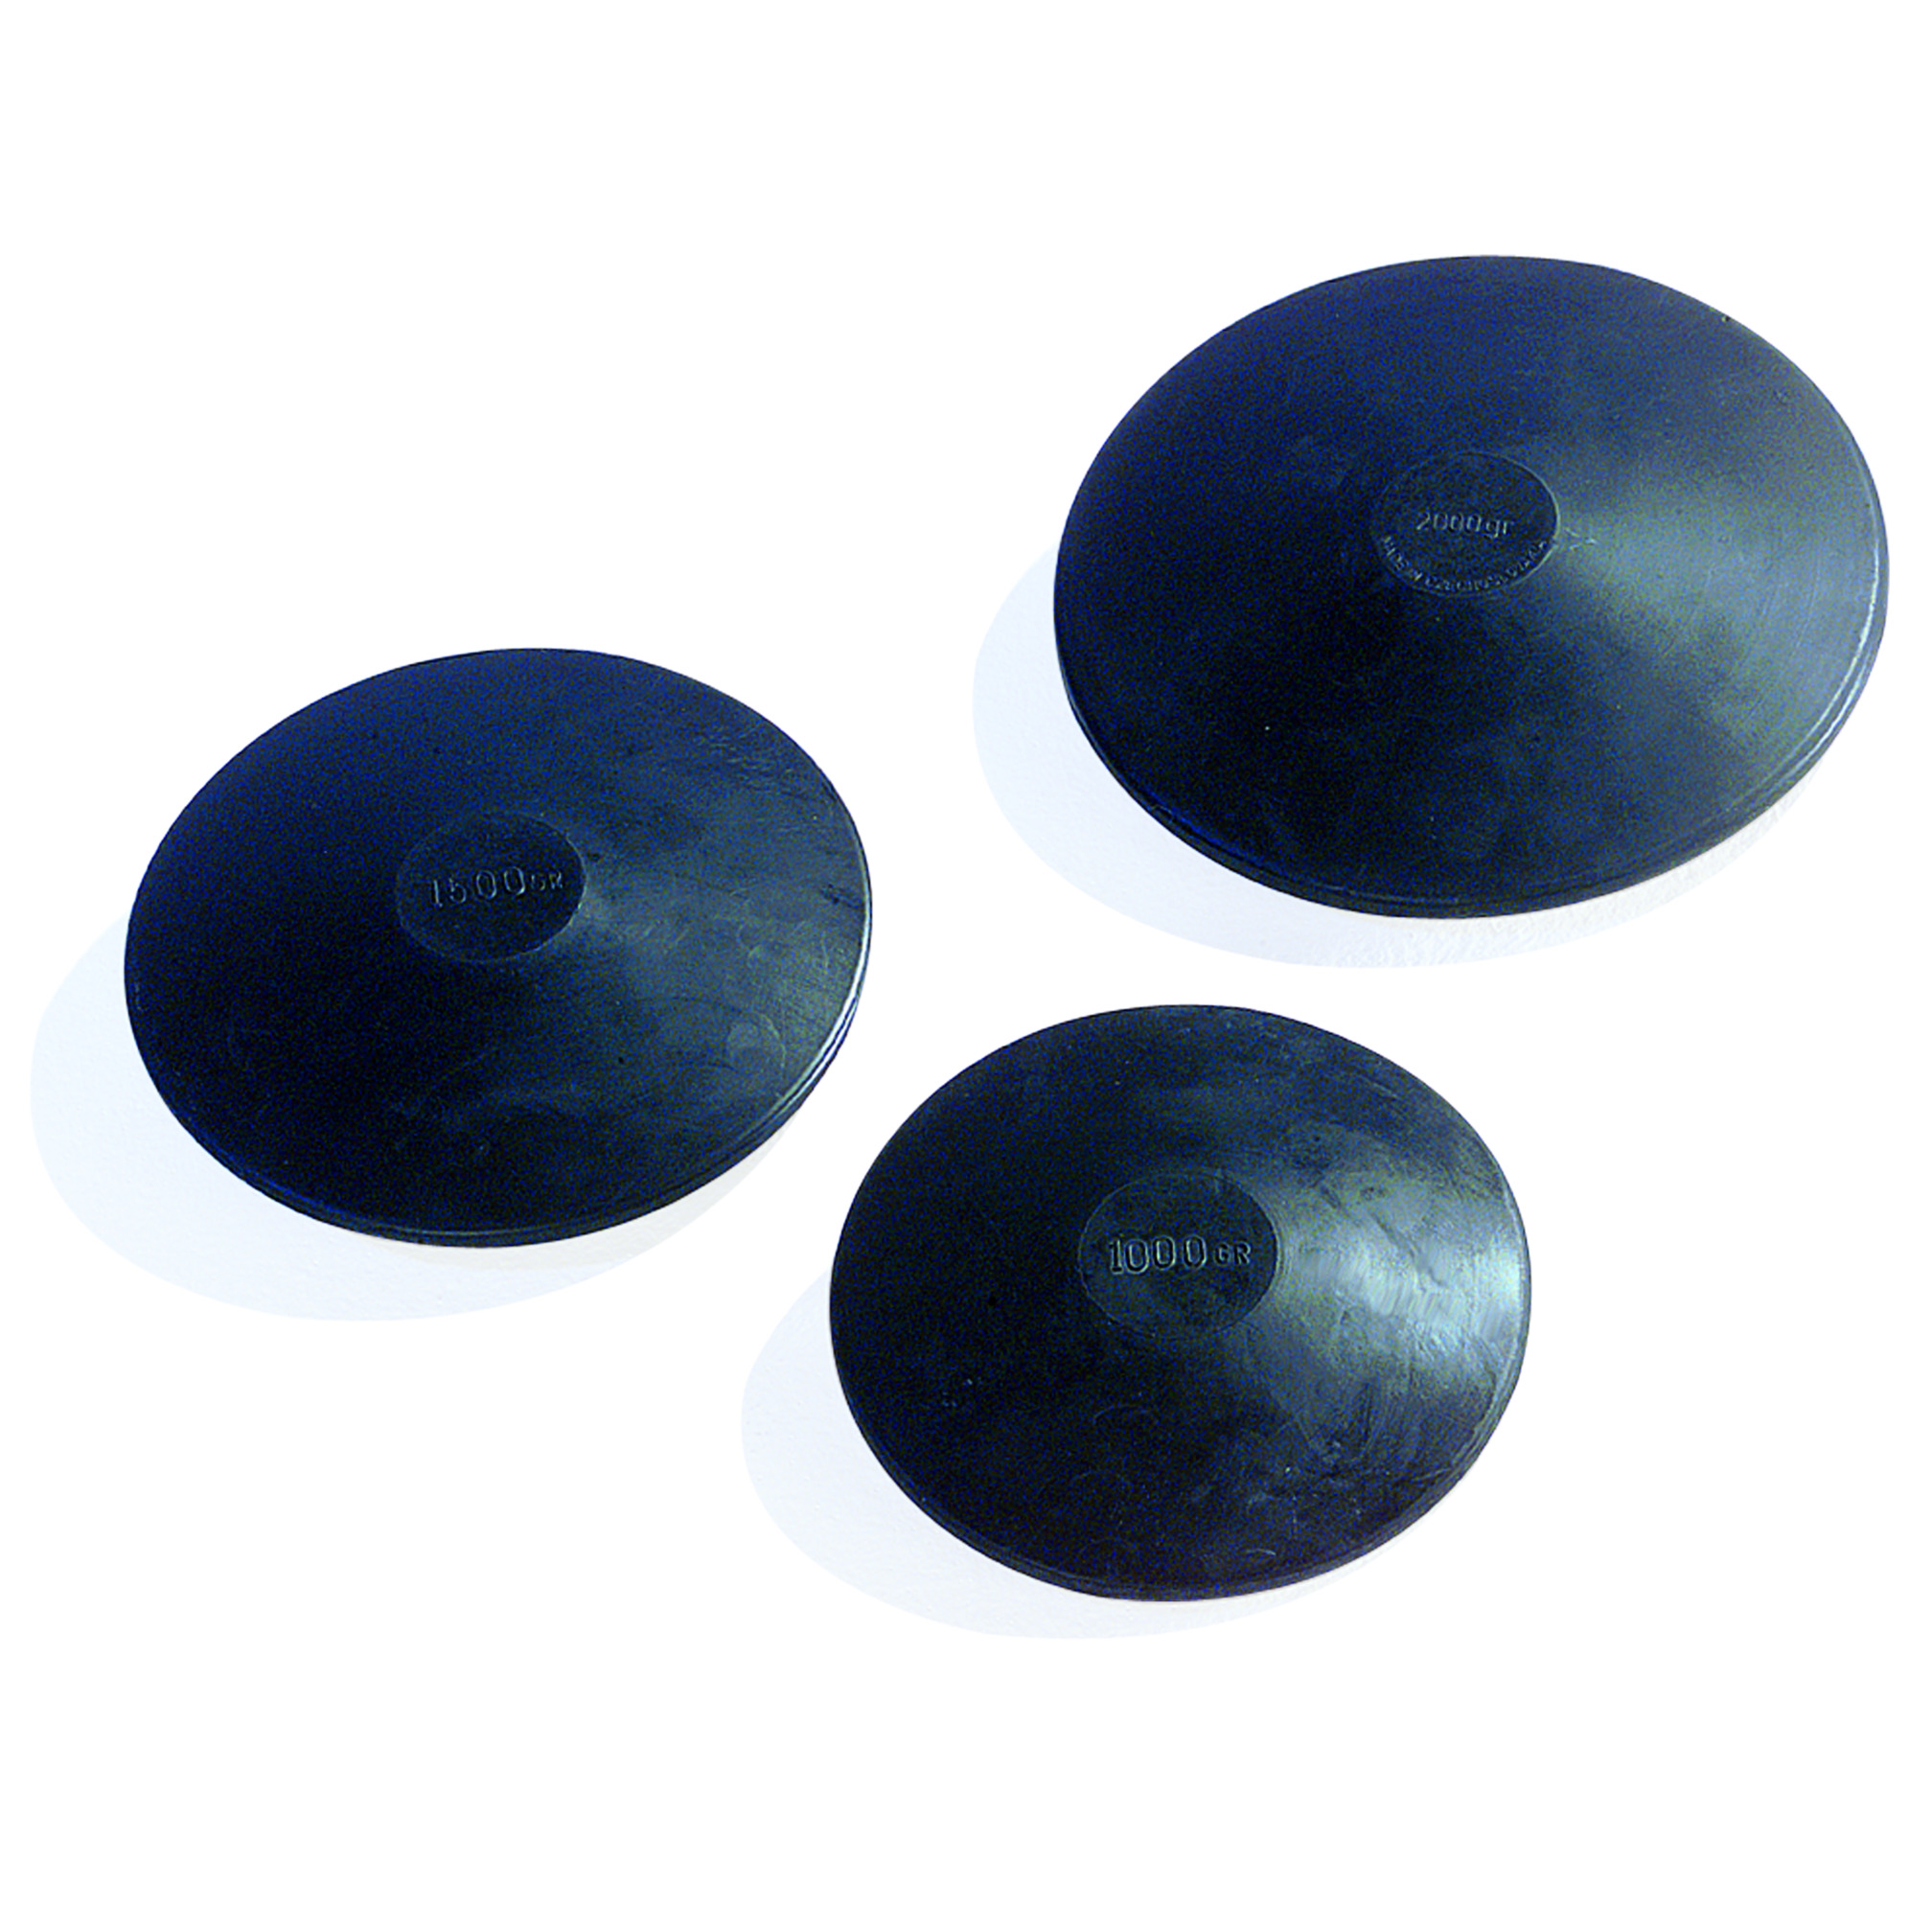 Discus rubber, 1,5 kg